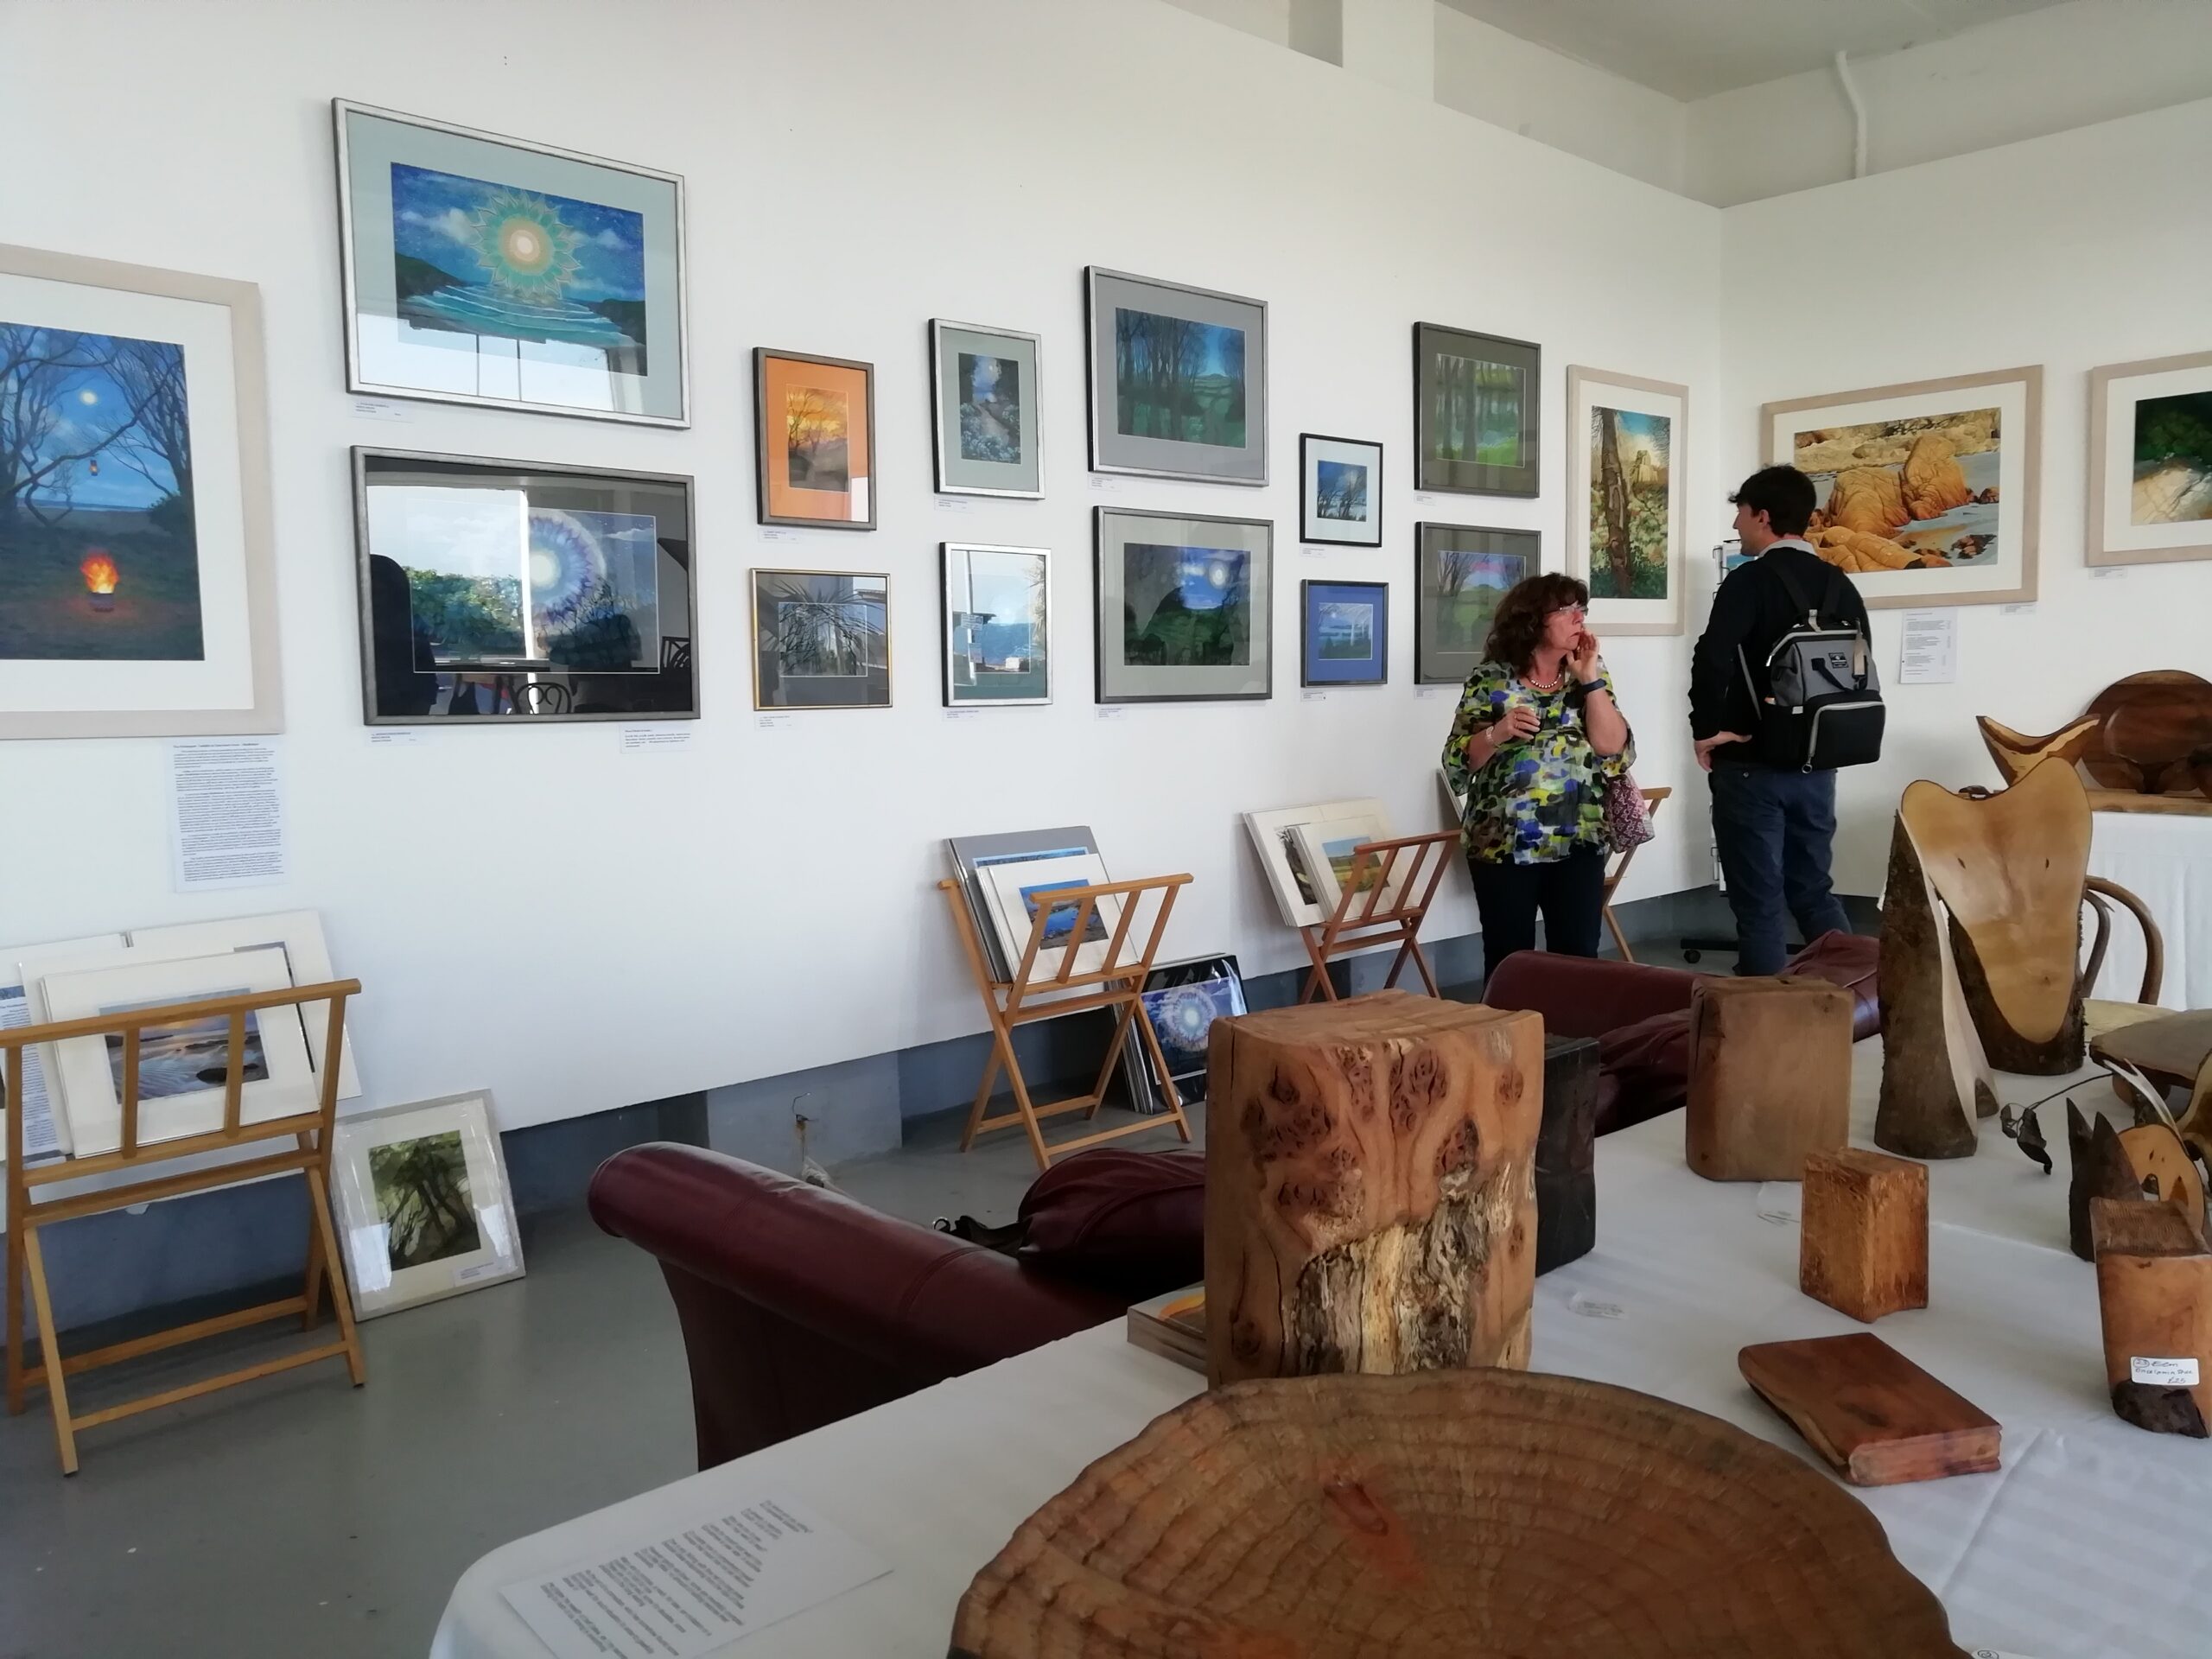 PZ Gallery Exhibition of Cornish Artist Sarah Vivian's Paintings